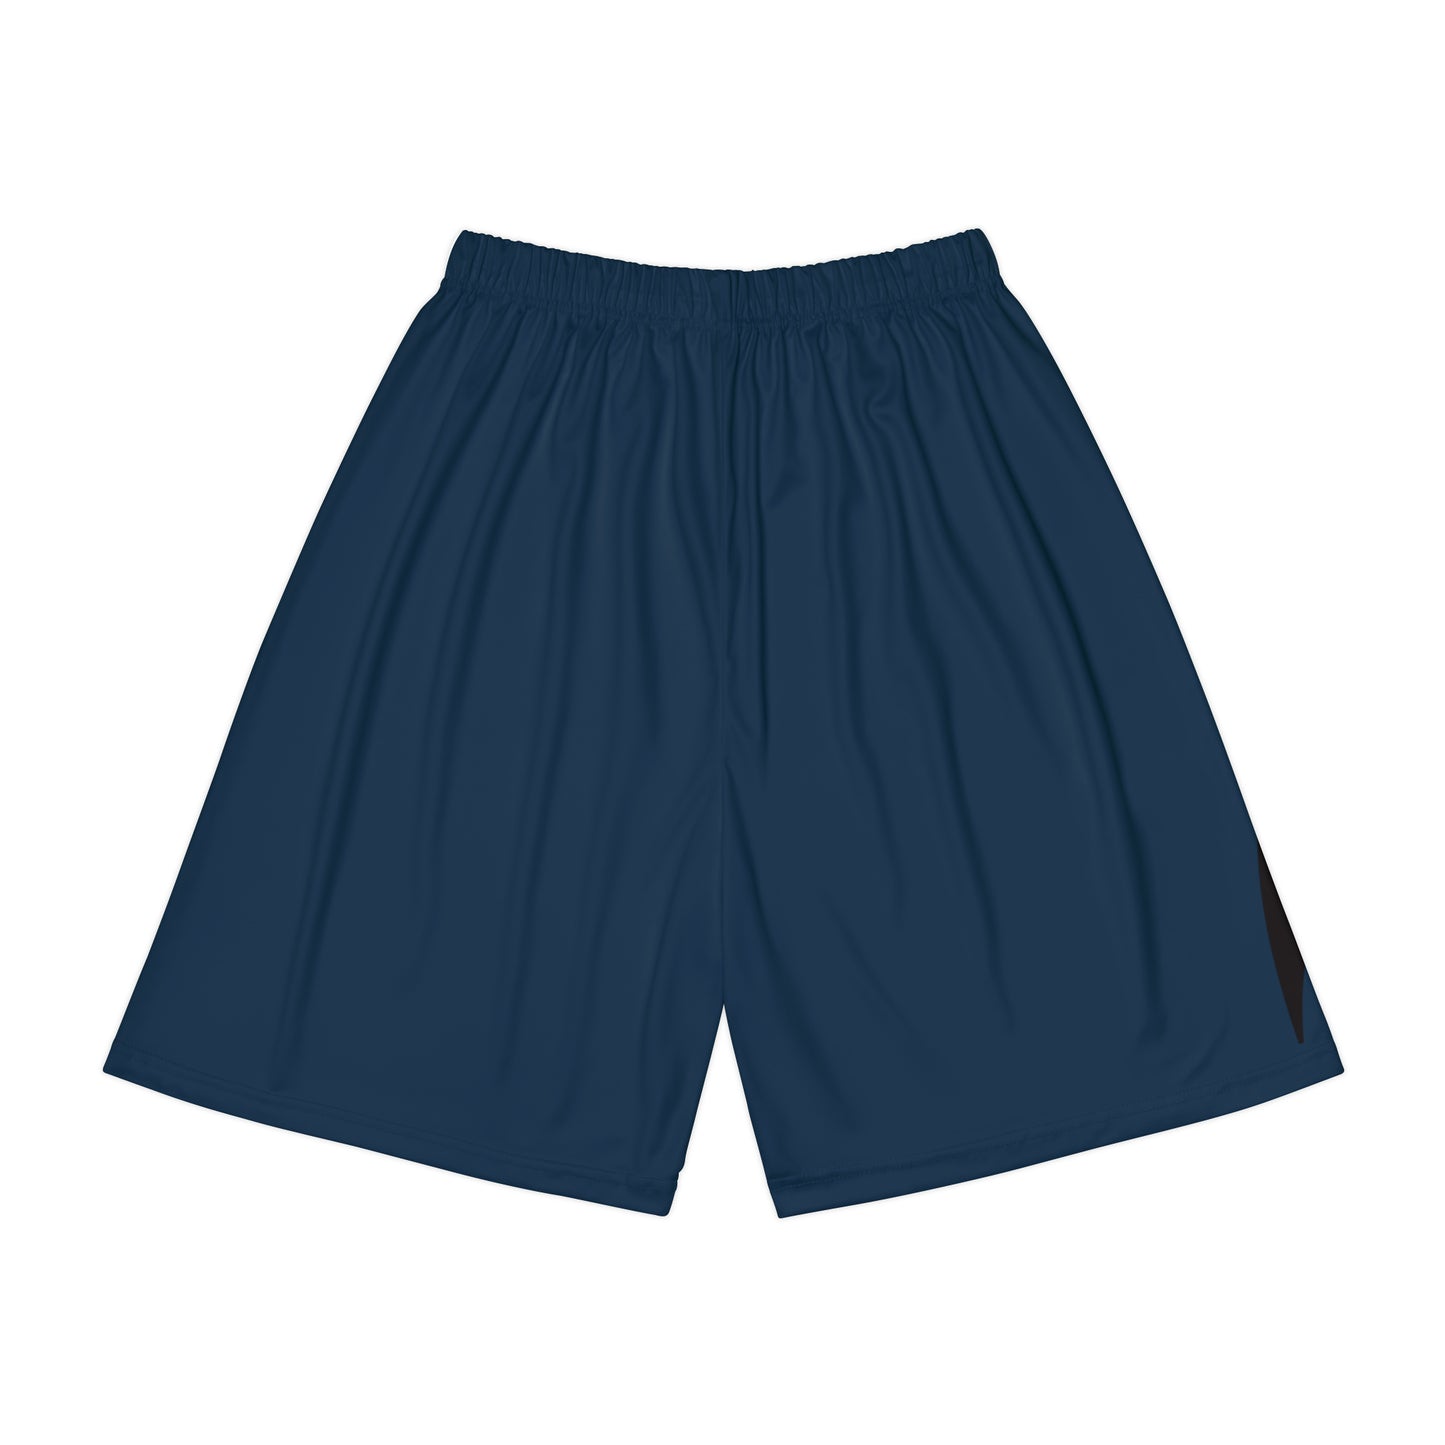 Sportin' Oxford Blue Court Shorts